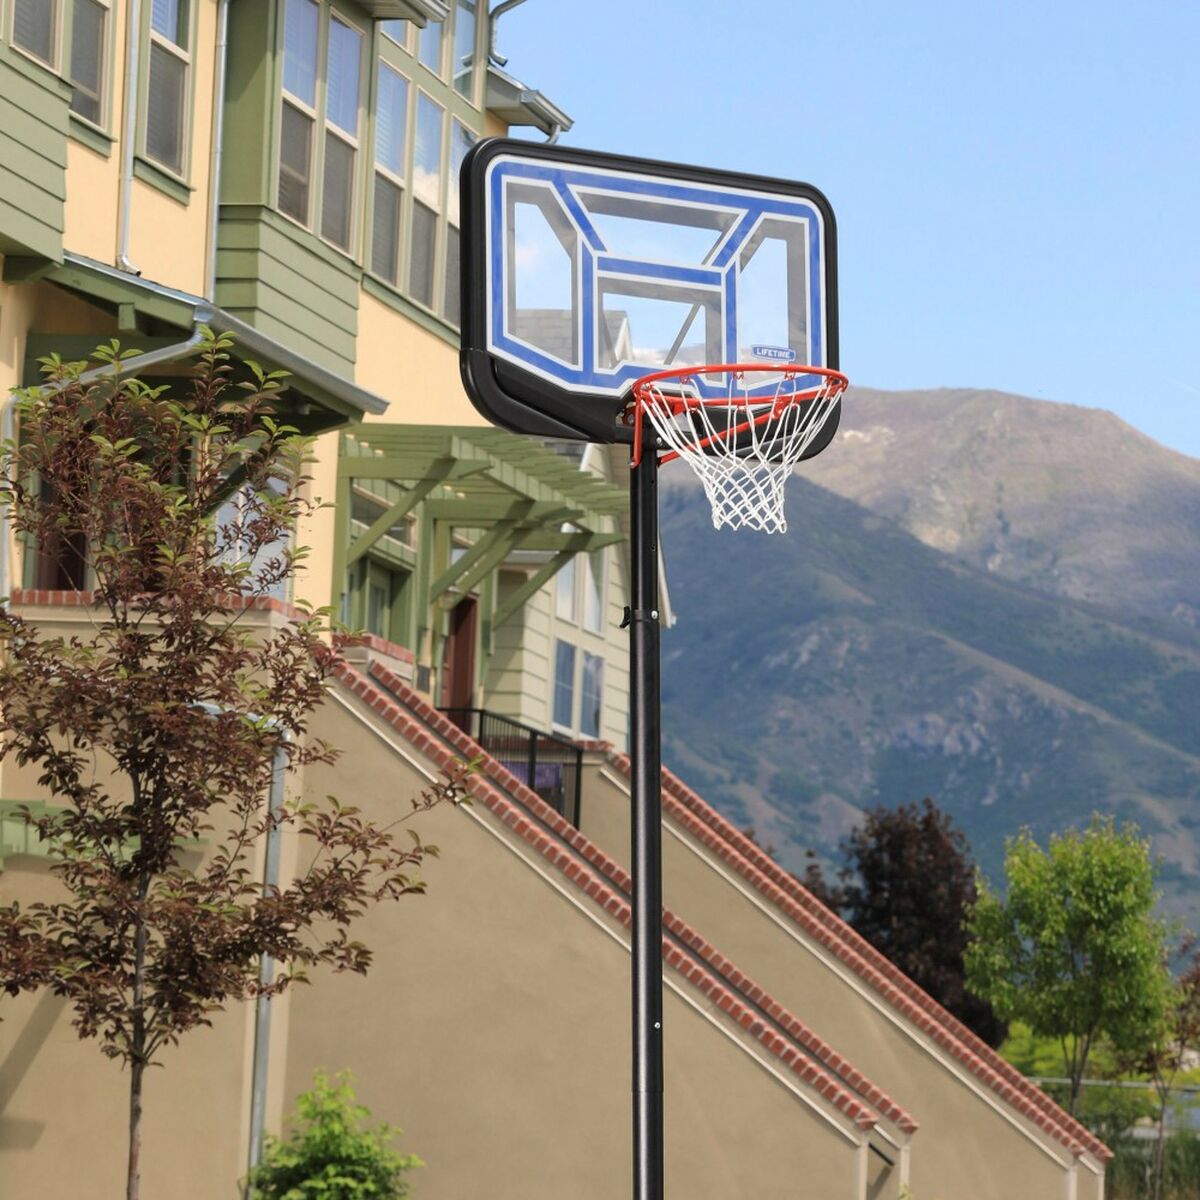 Basketballkorb Lifetime 110 x 305 x 159 cm